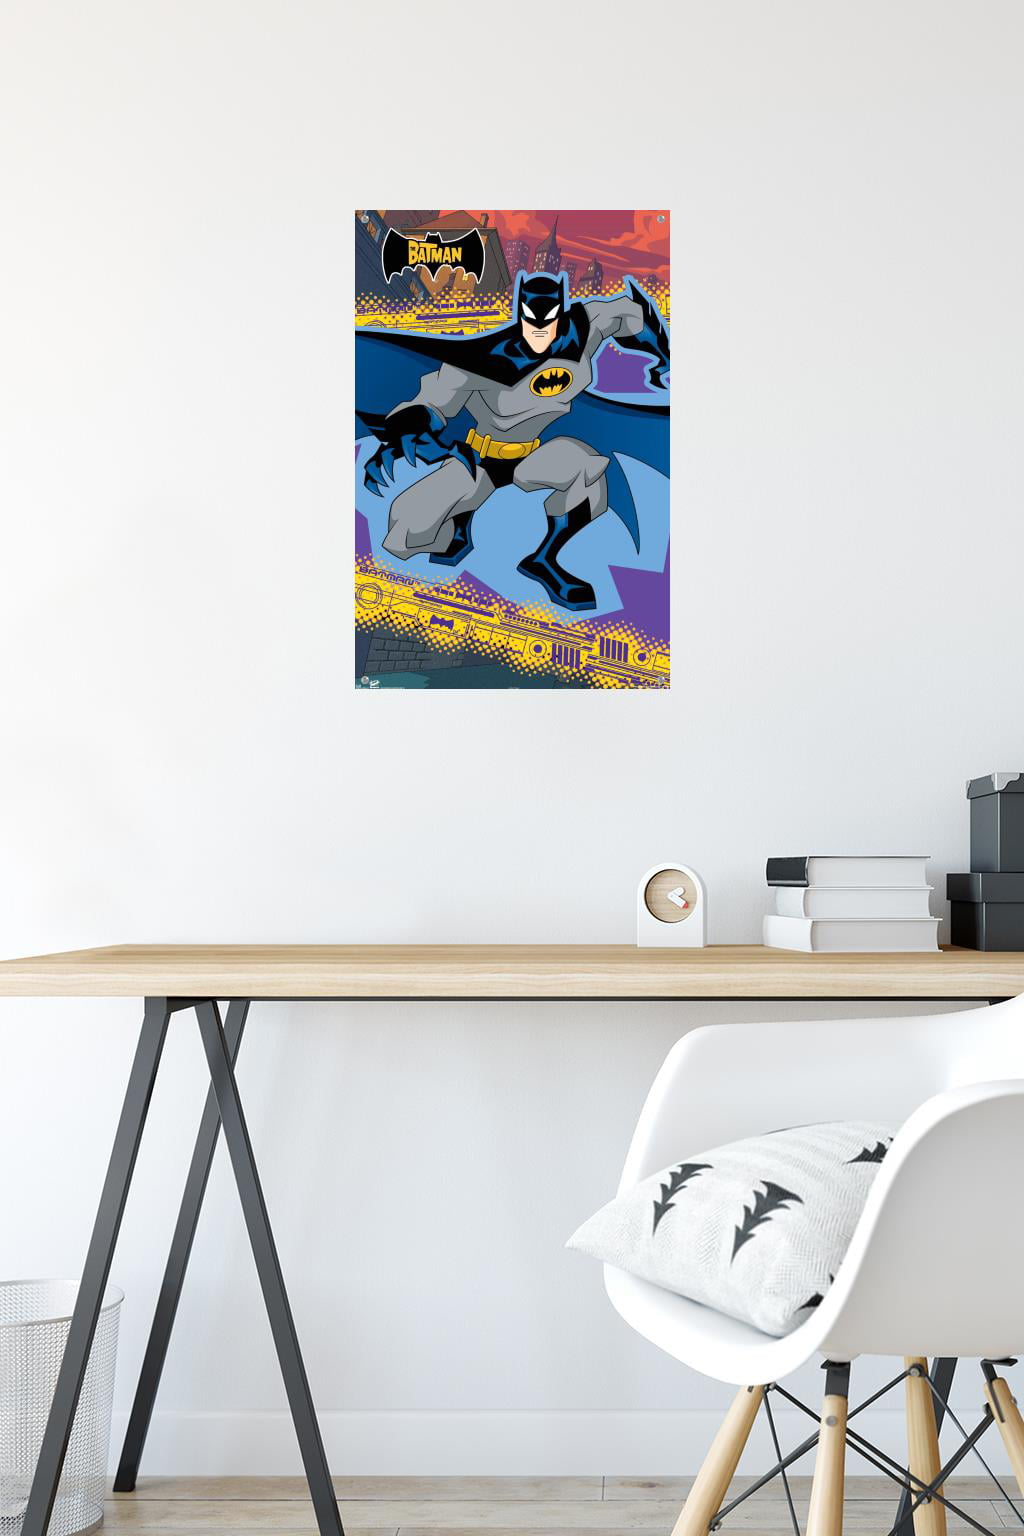 Batman Poster/ DC Movie Poster sold by Cabdulqaadir, SKU 24554207